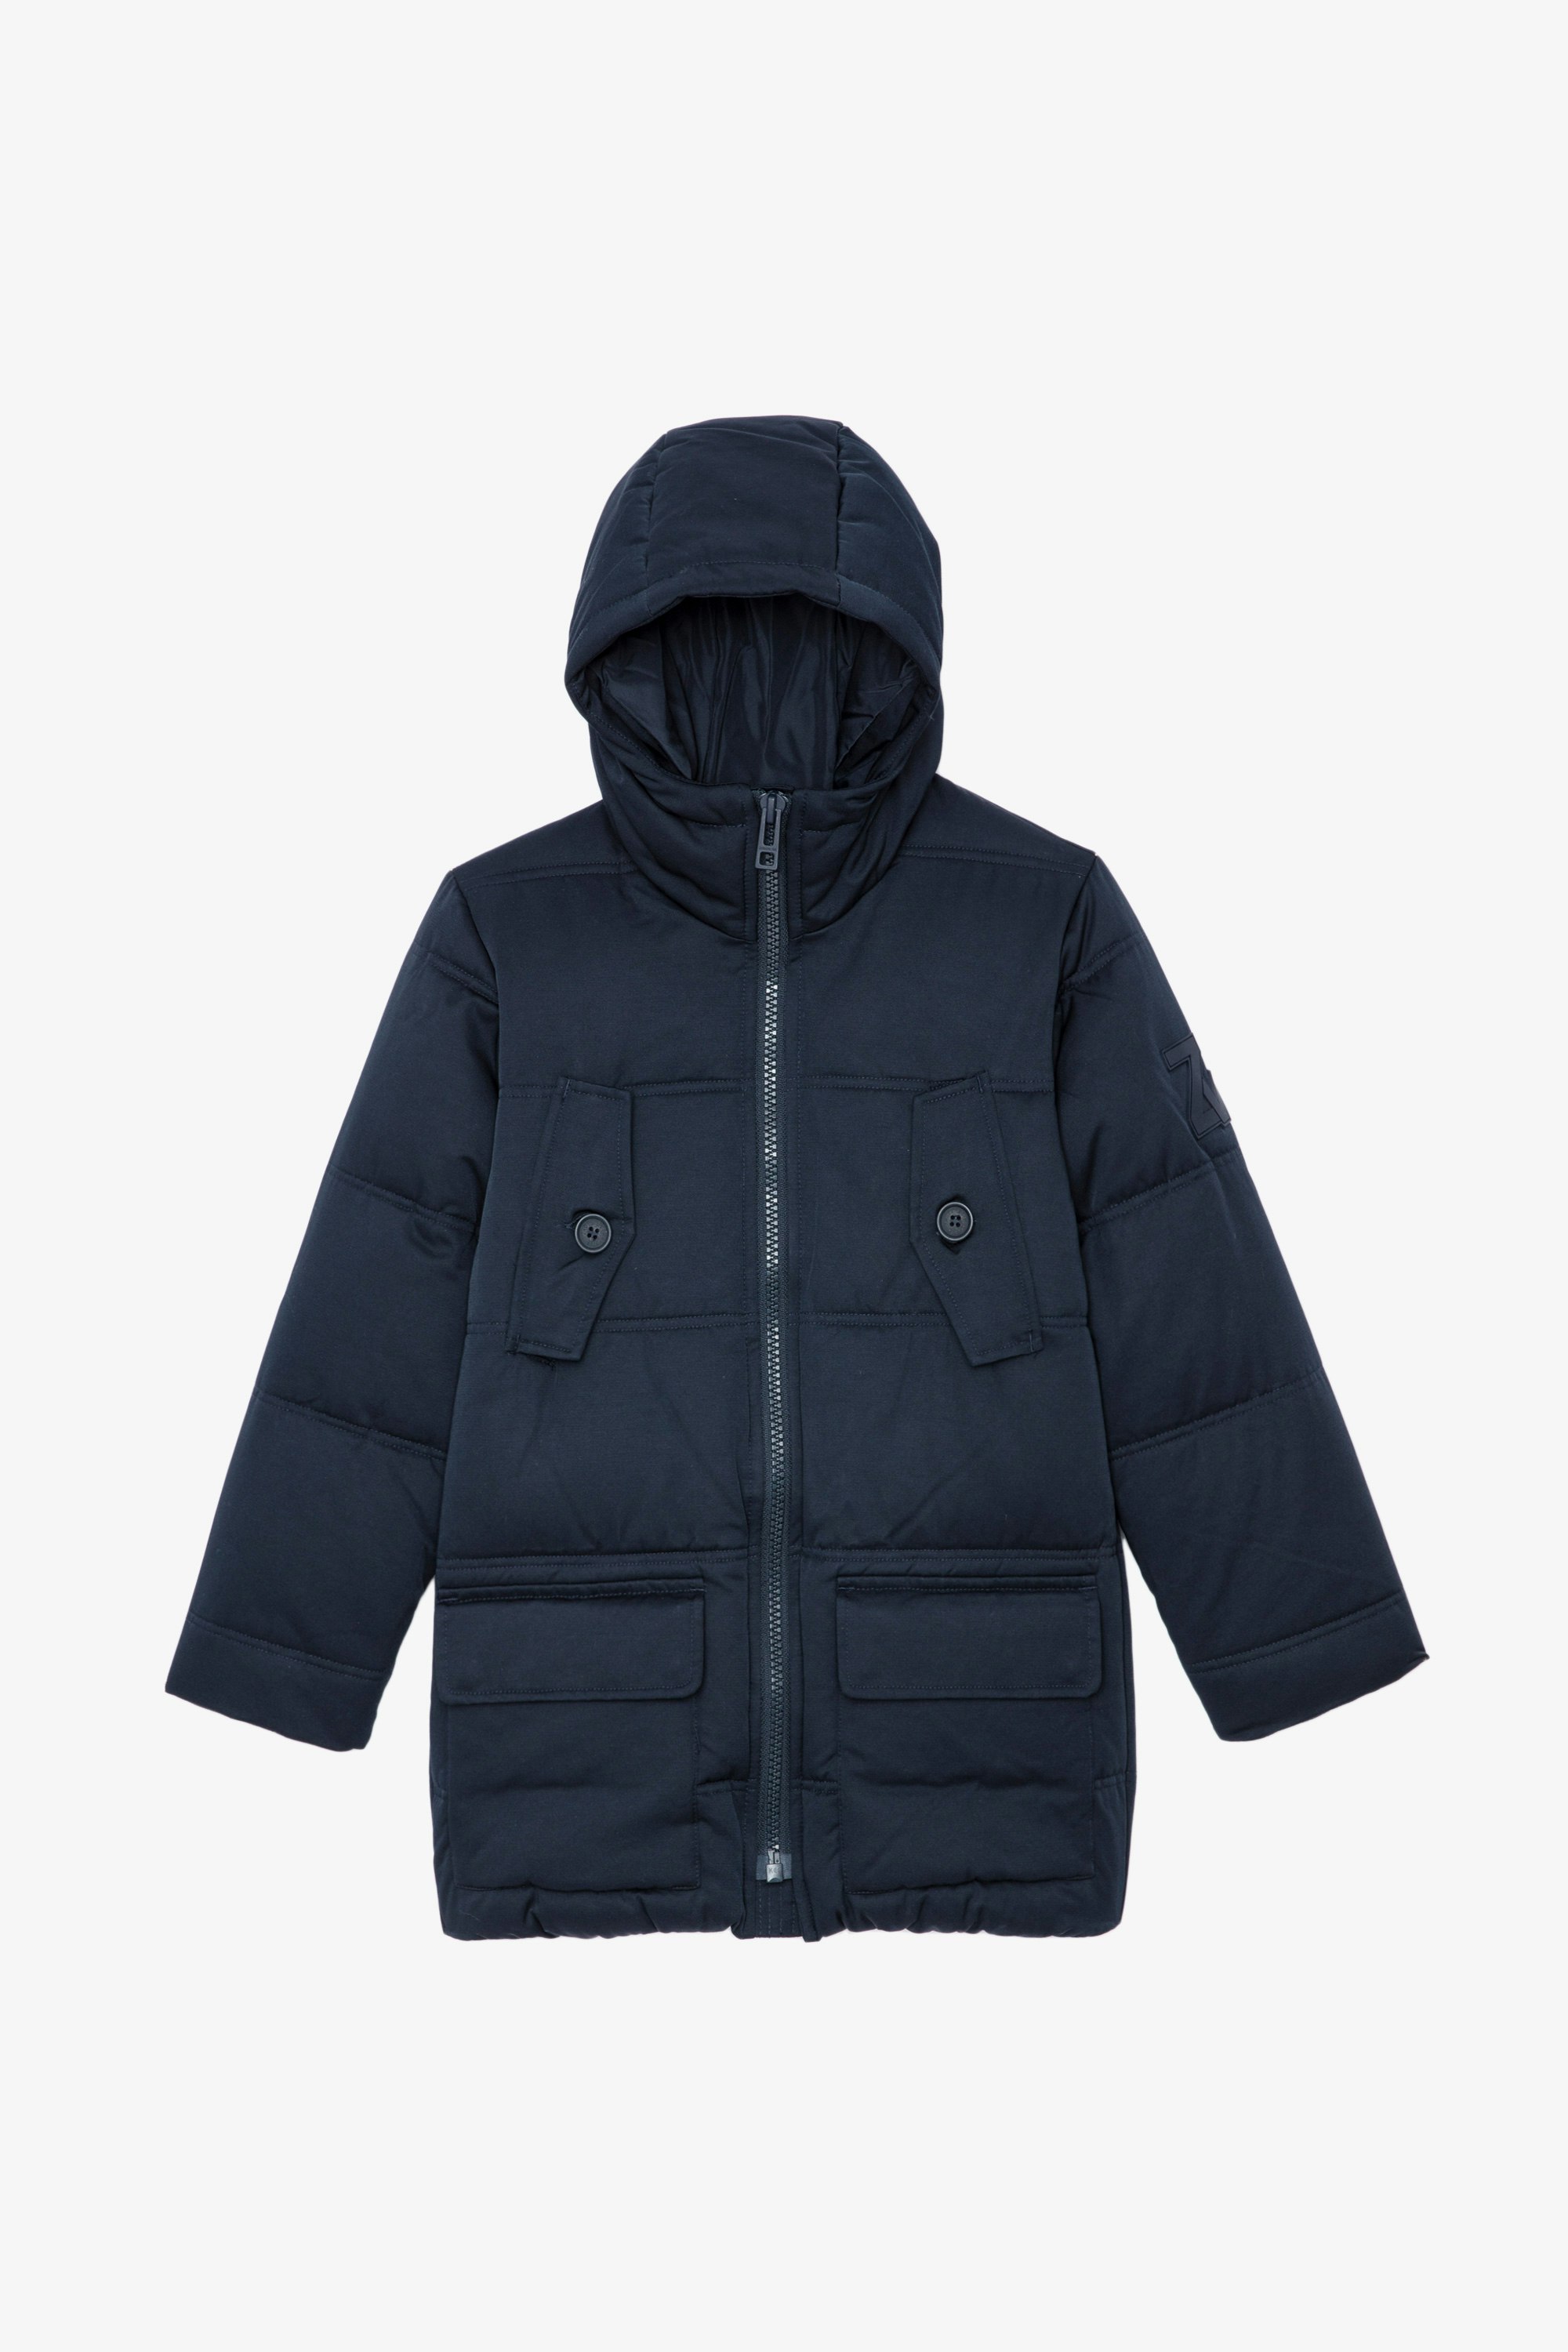 Bow Children’s Puffer ジャケット Children’s navy blue and black hooded puffer jacket 